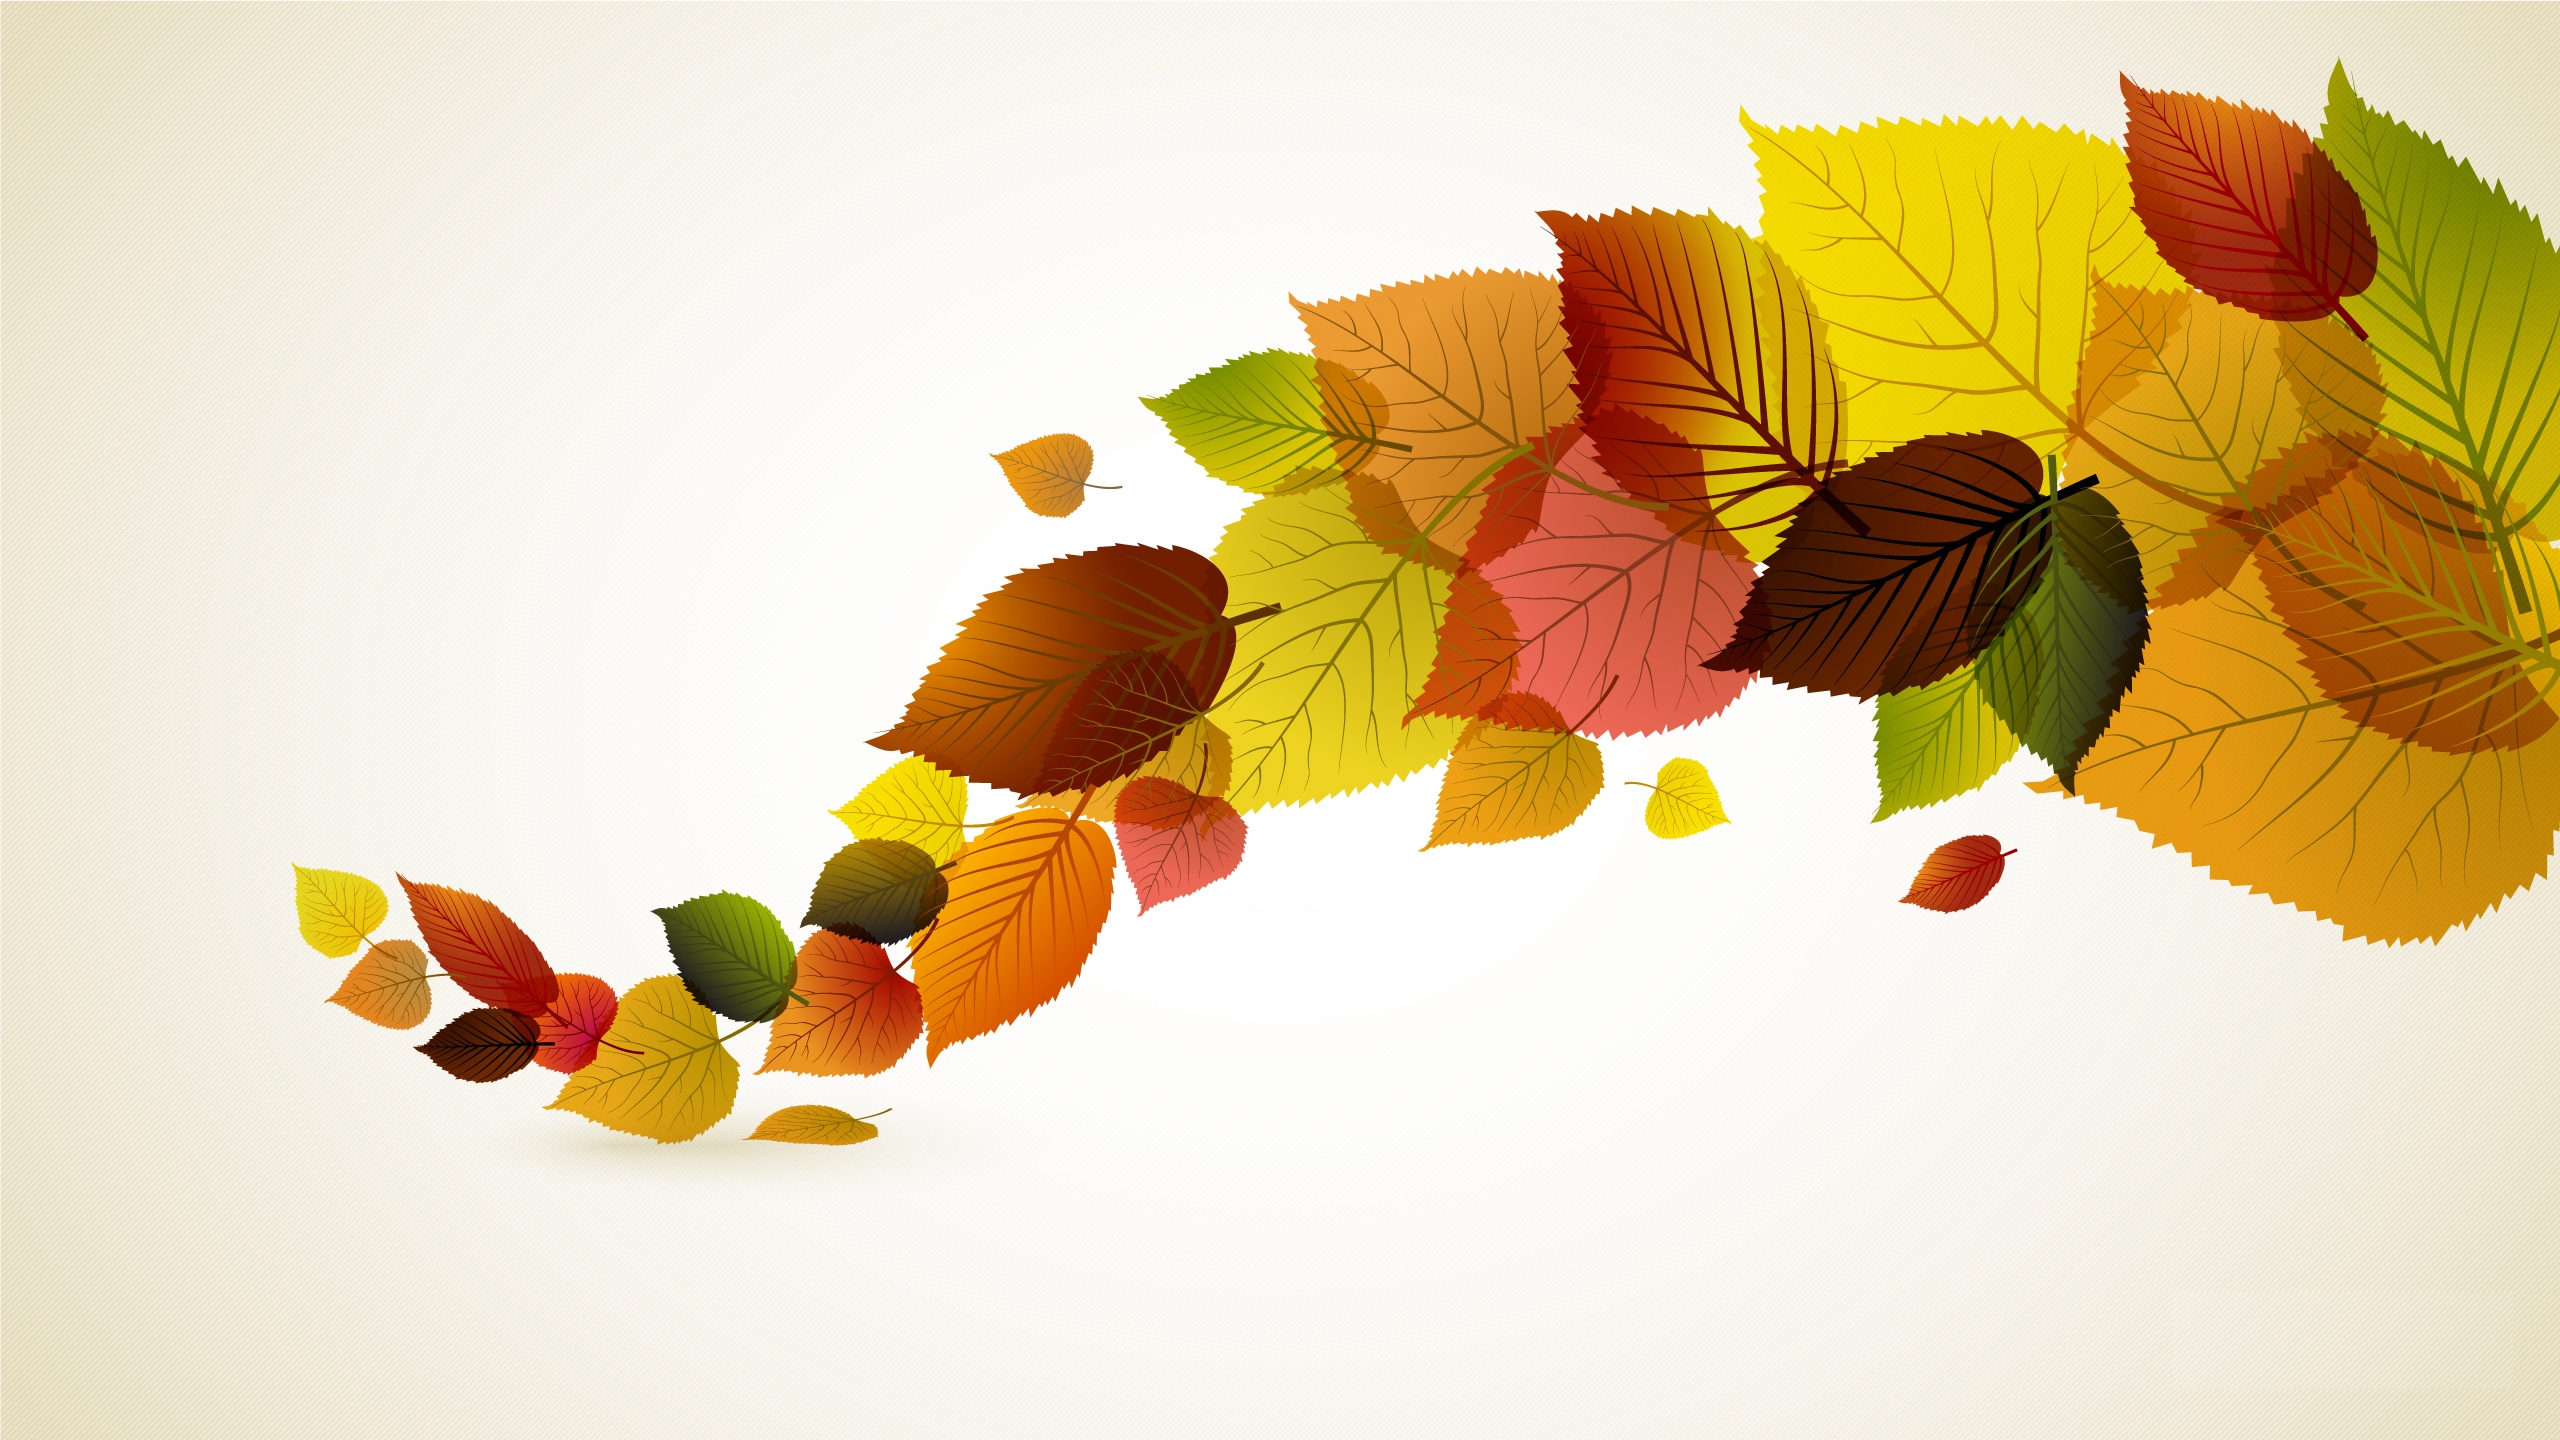 Autumn Leaves for 2560x1440 HDTV resolution